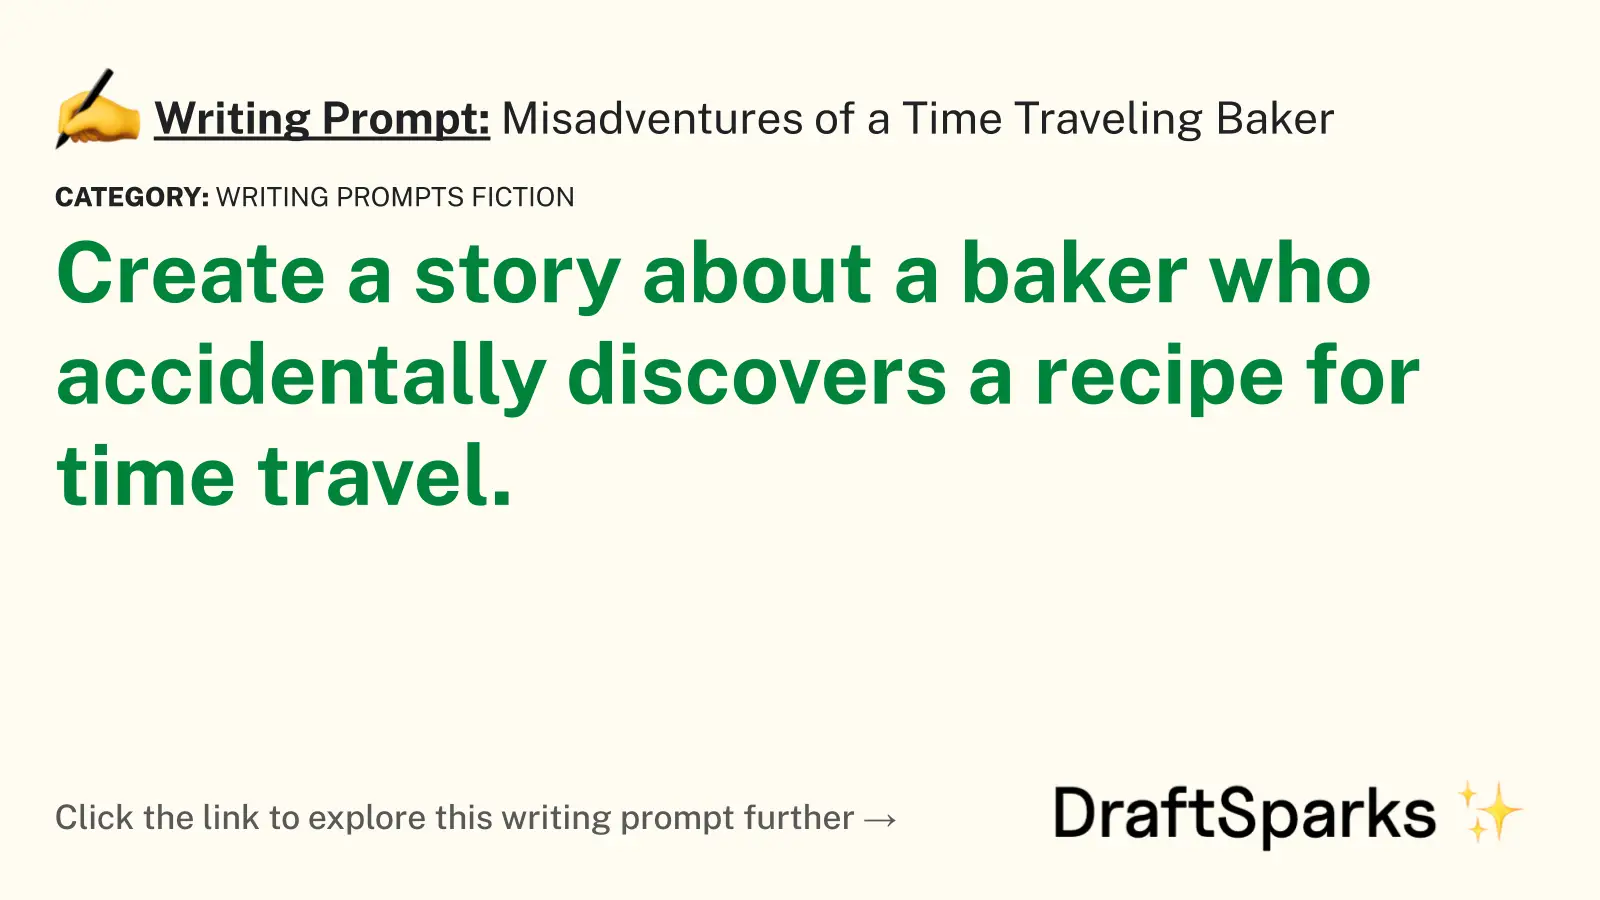 Misadventures of a Time Traveling Baker